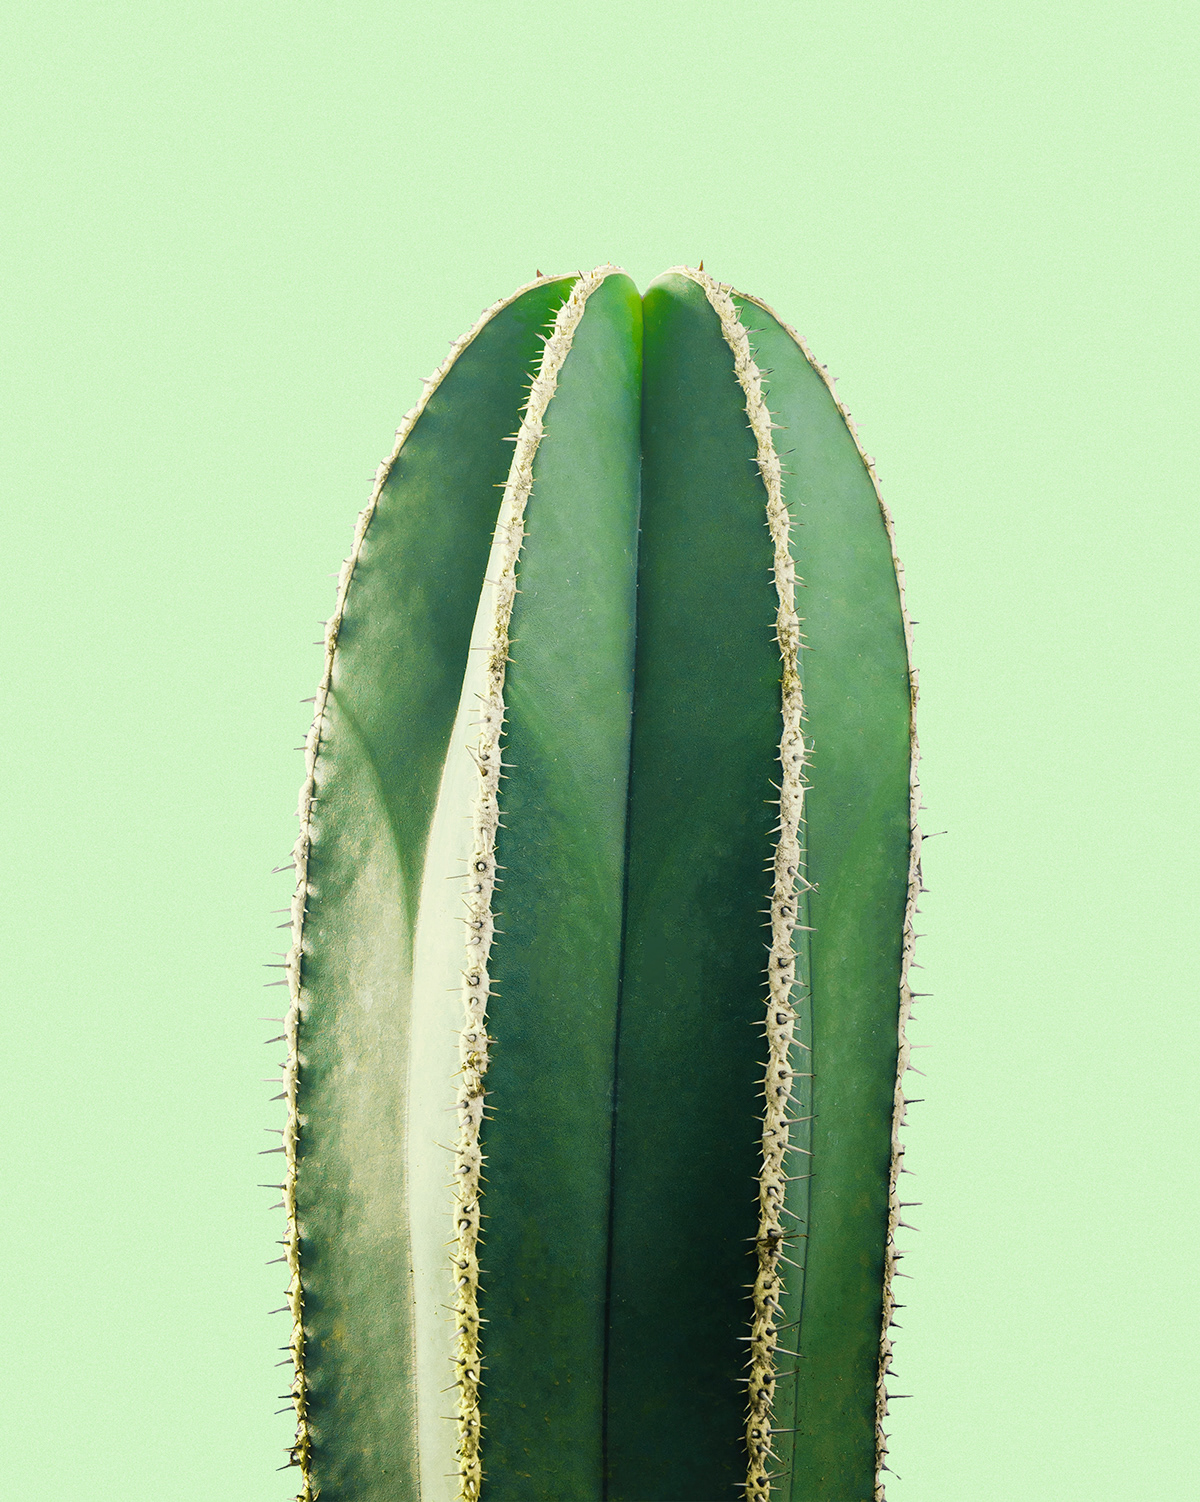 cactus cacti prickly Pear download texture Succulent minimal western desert